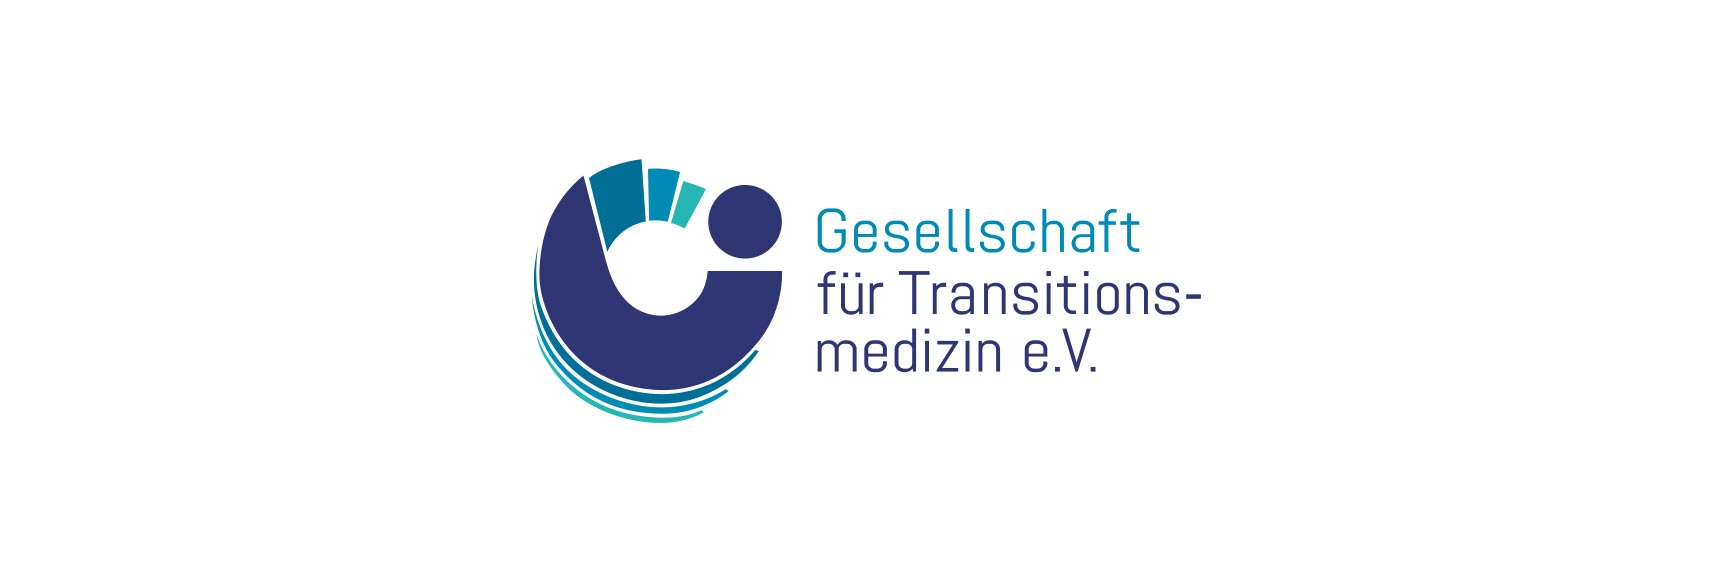 Logo Transitionsmedizin